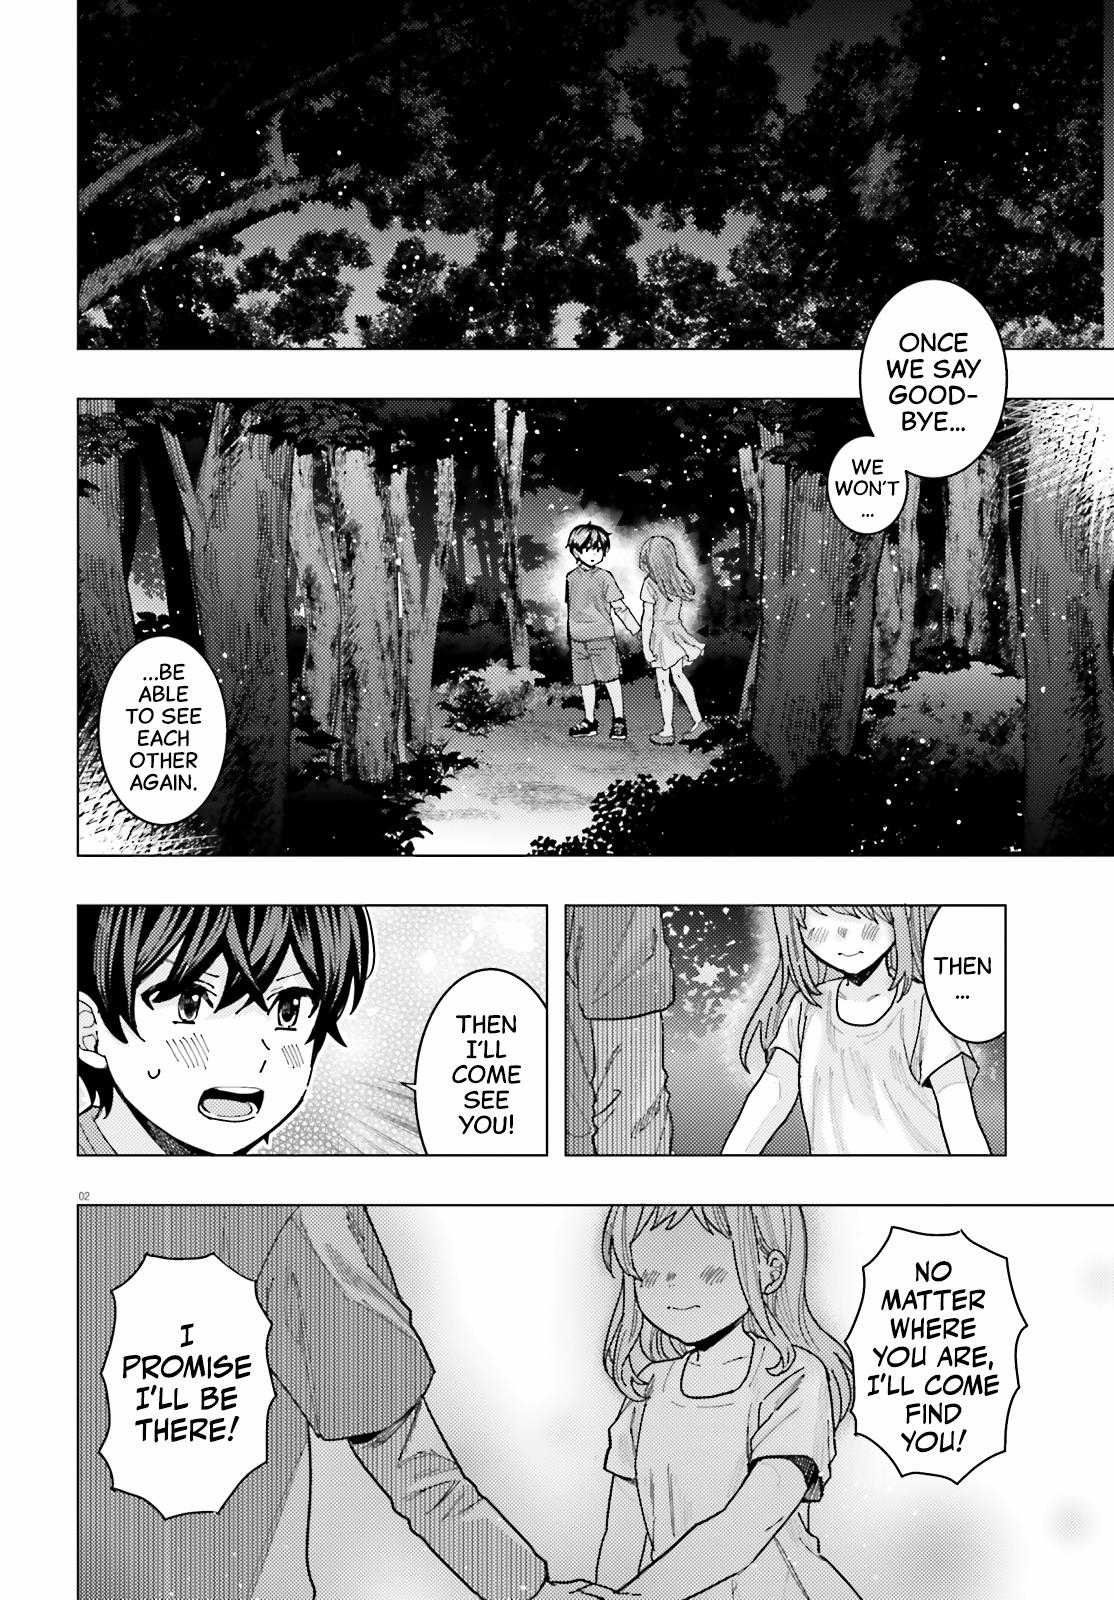 Himegasaki Sakurako Wa Kyoumo Fubin Kawaii! - Page 2